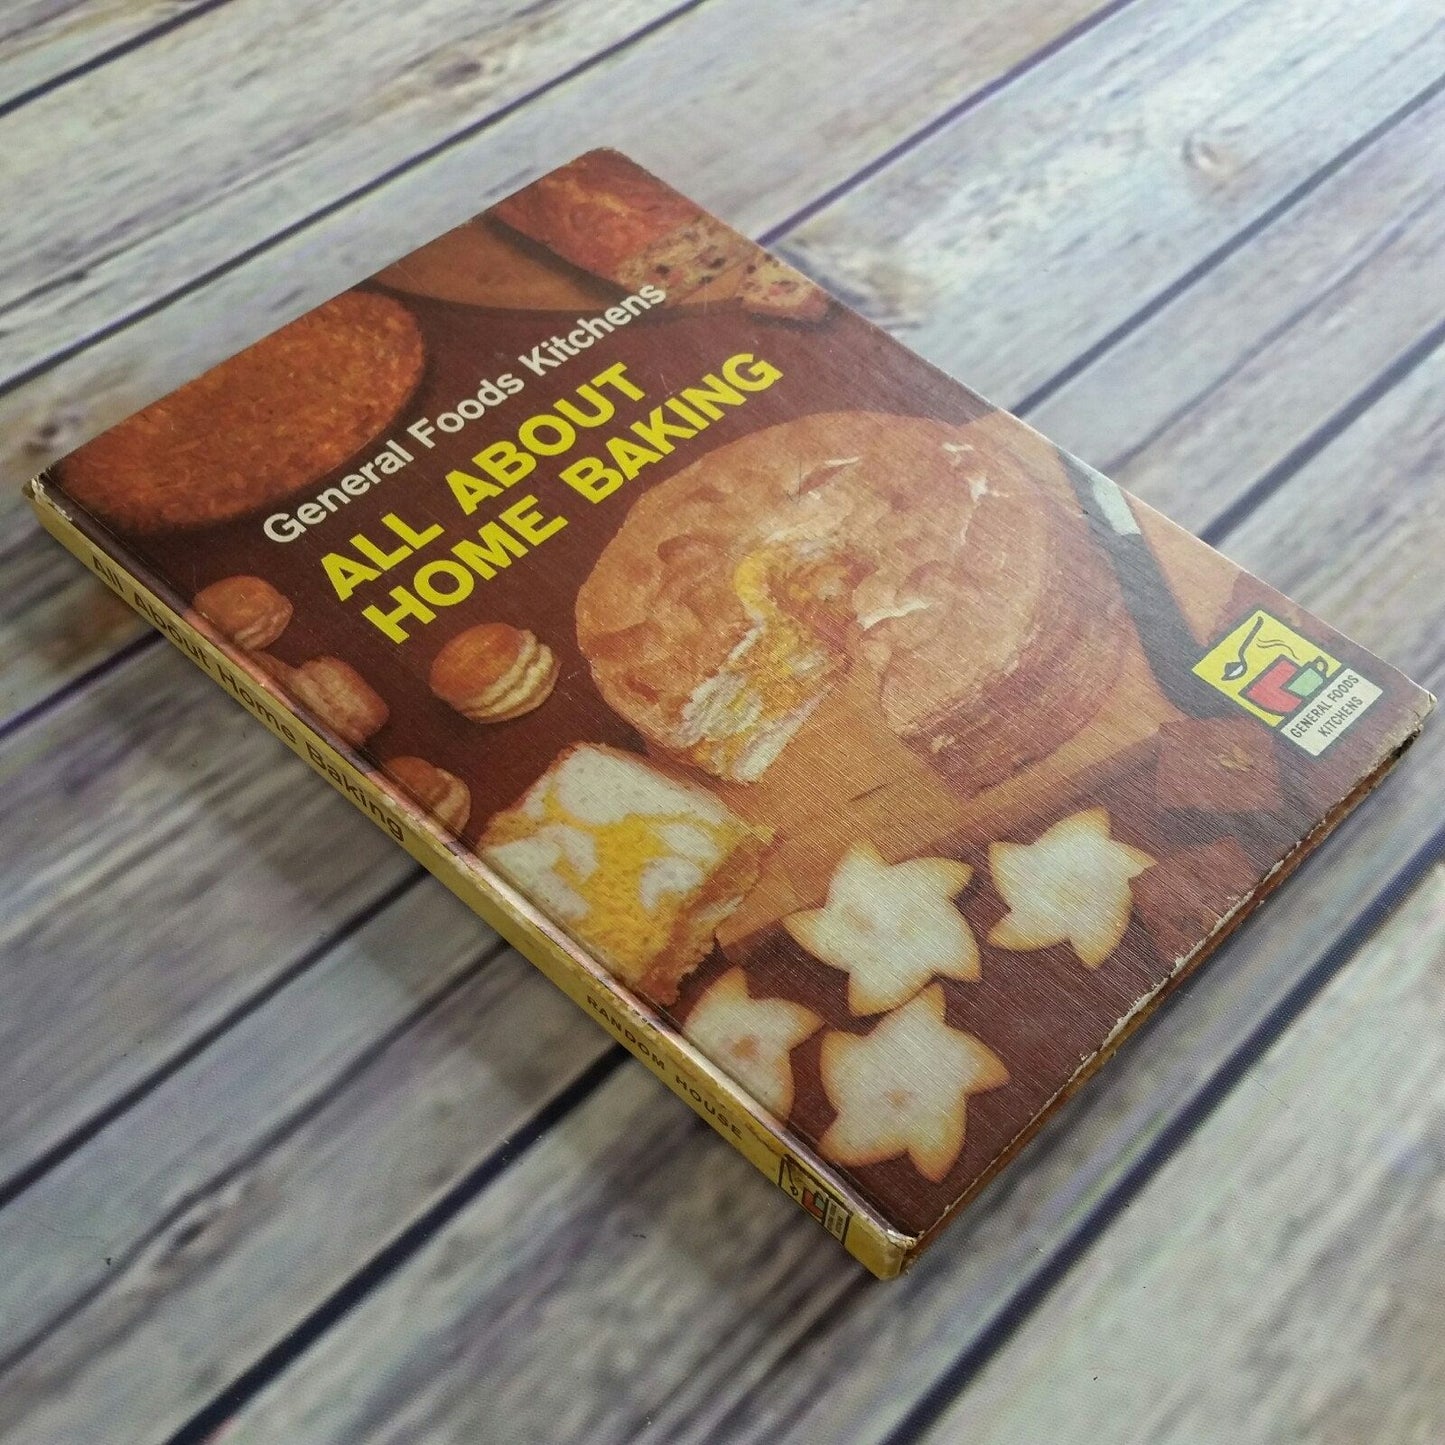 Vintage Cookbook All About Home Baking General Foods Kitchens 1960 Hardcover No Dust Jacket